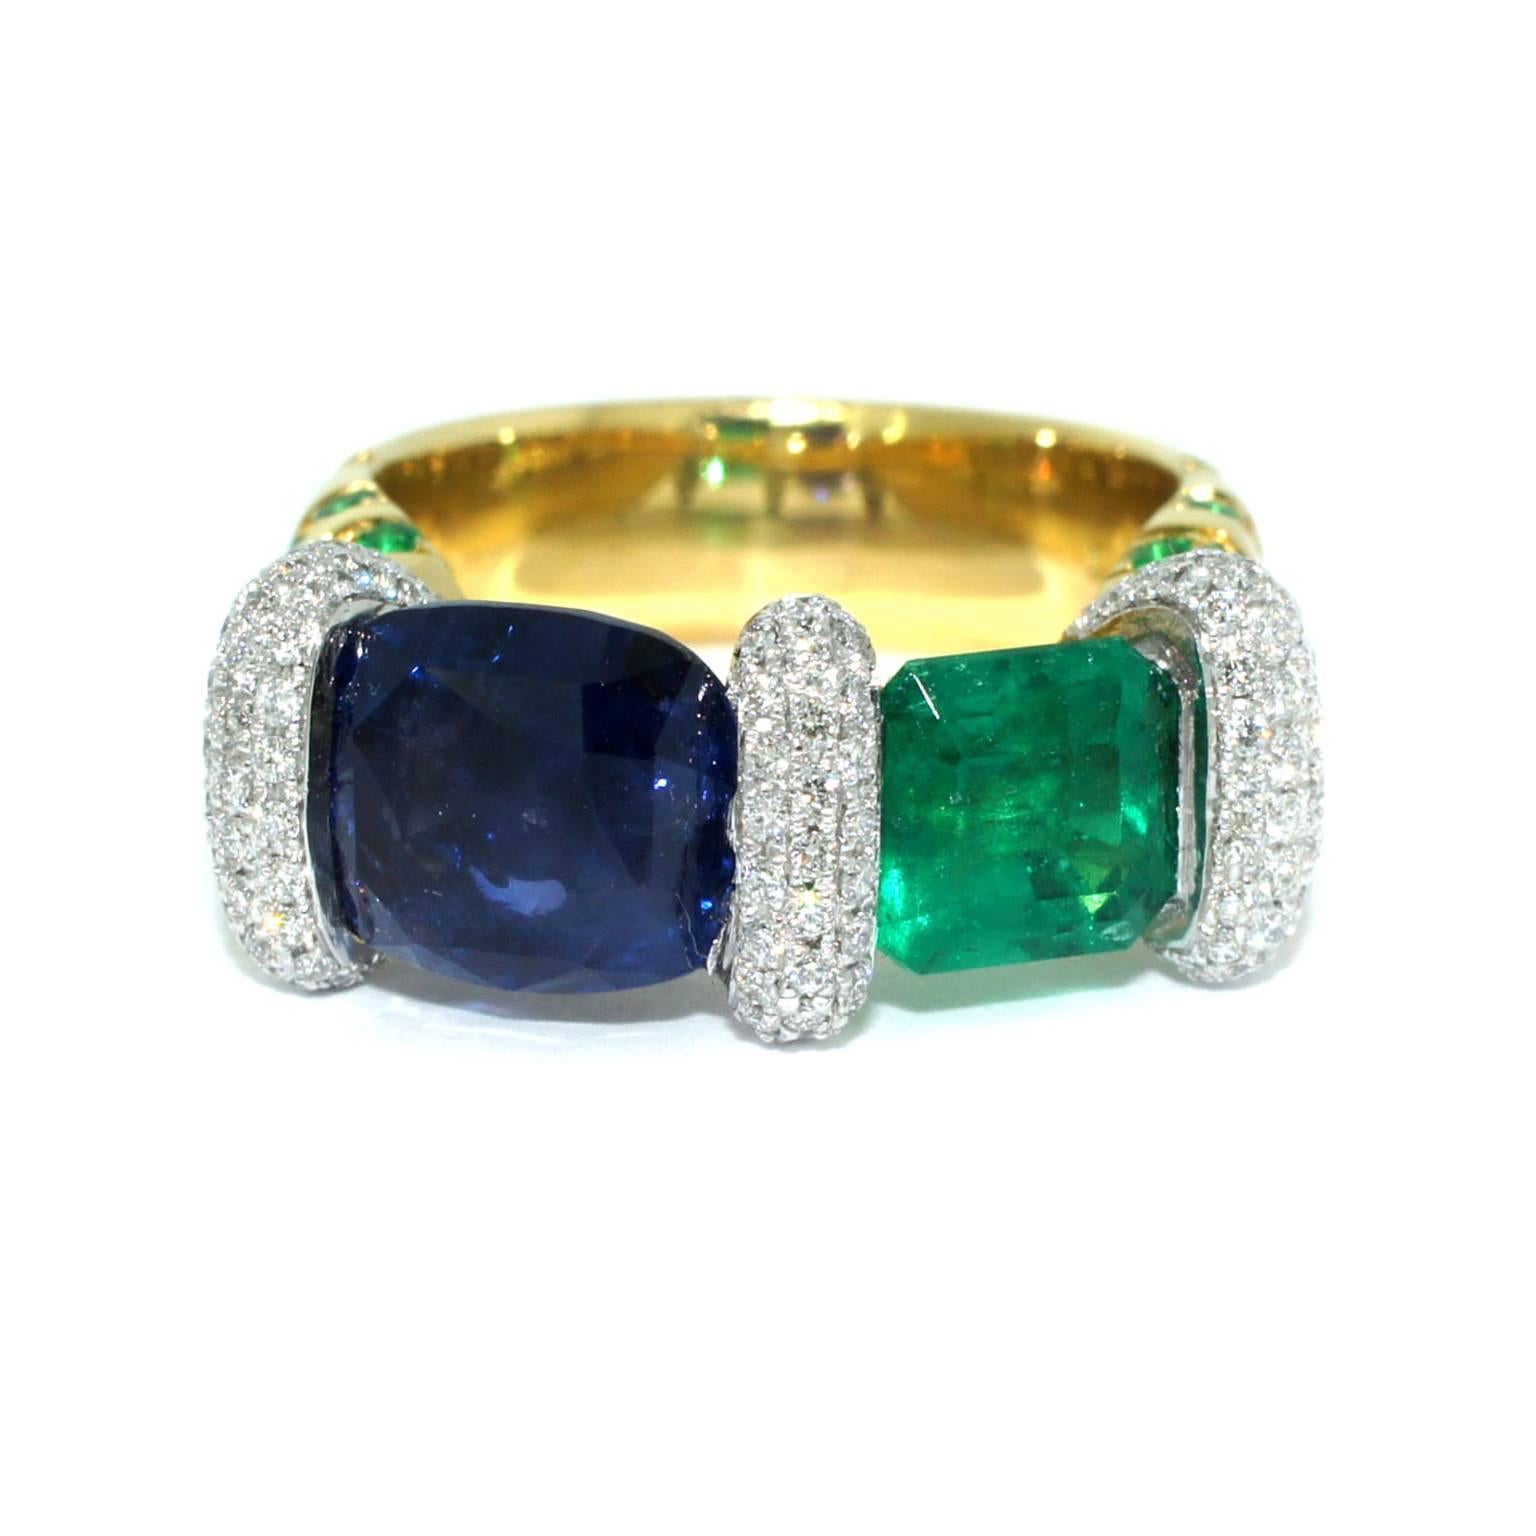 Contemporary Lizunova Handmade Sapphire, Emerald & Diamond Ring in 18k yellow & white gold For Sale